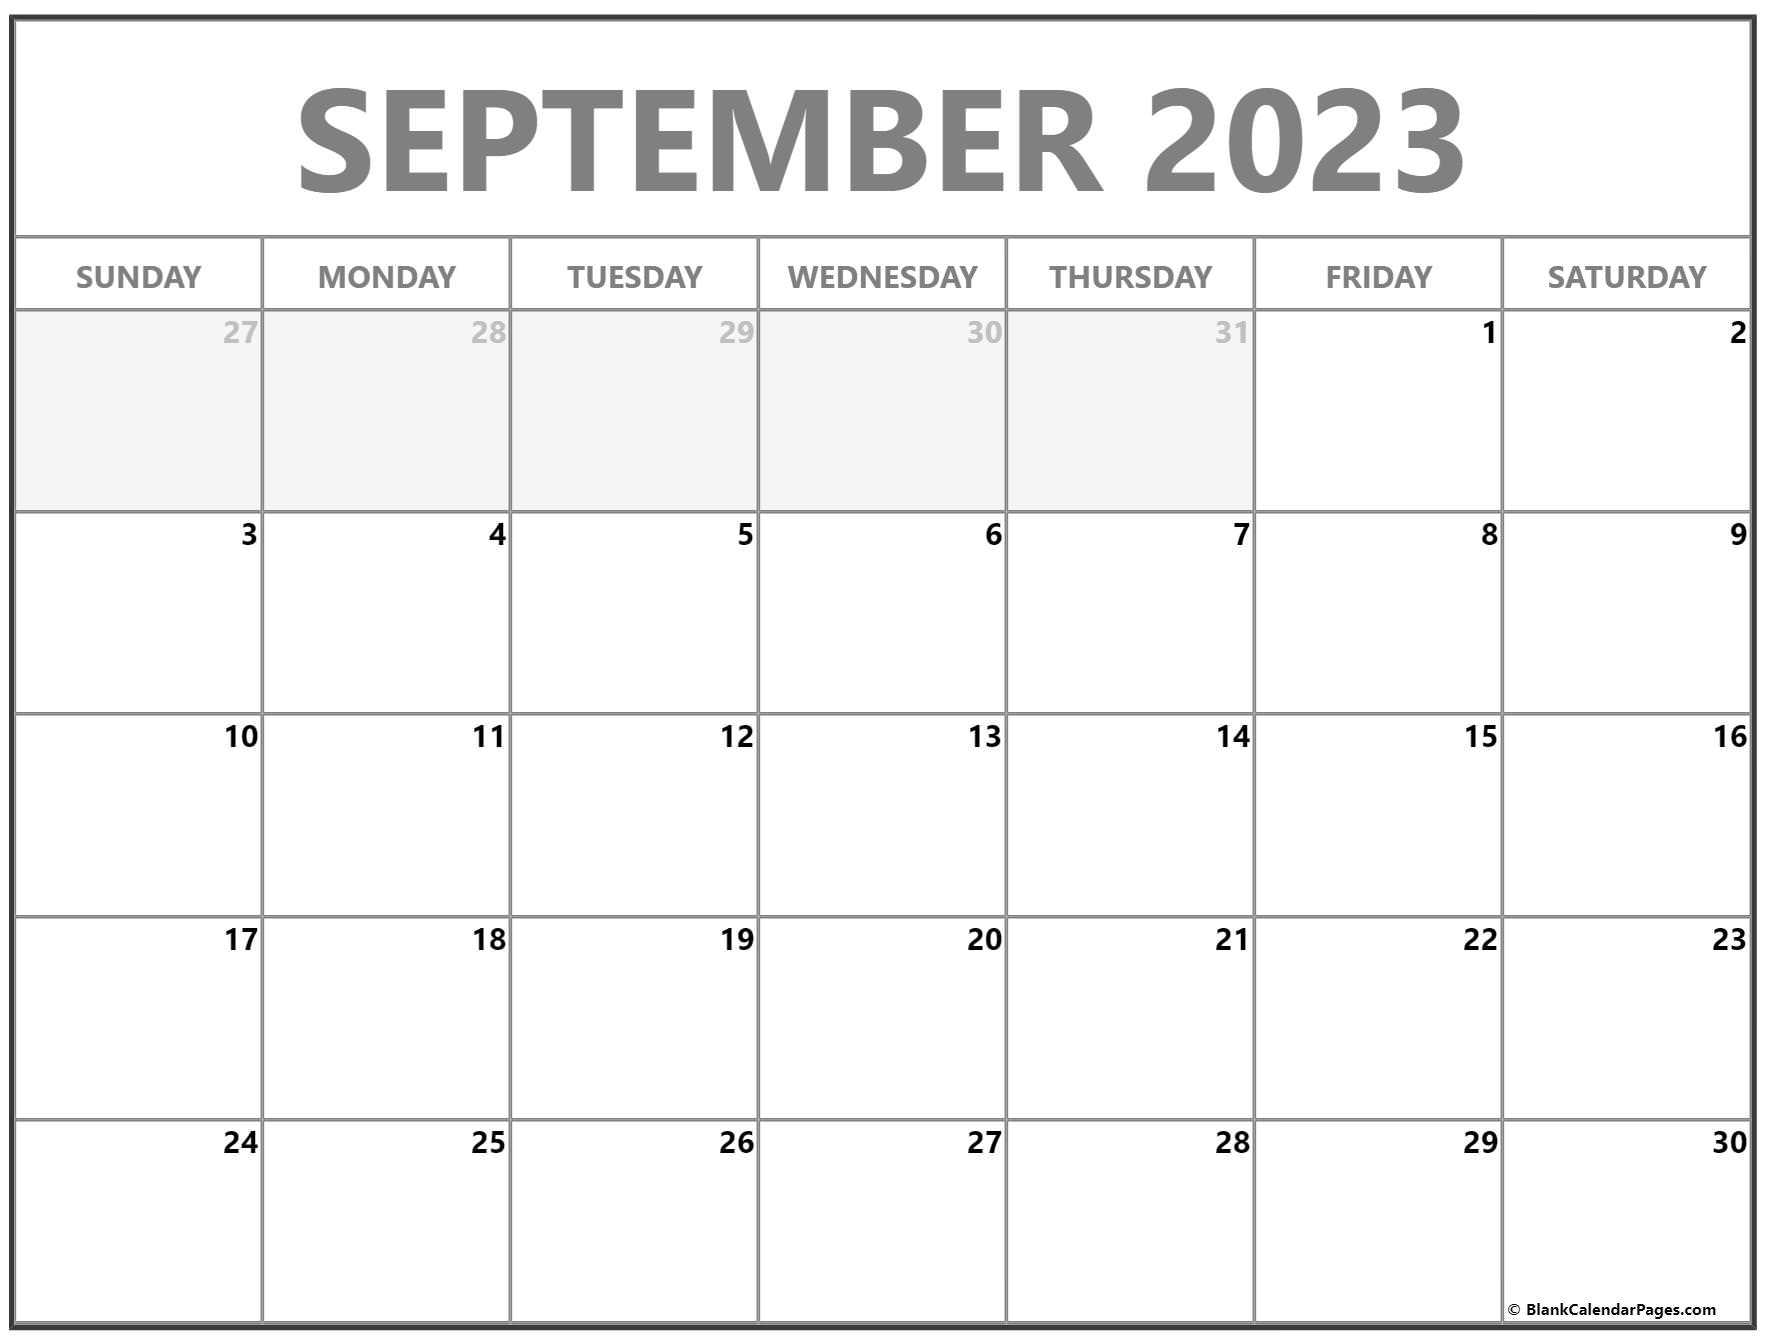 September 2023 Calendar For Printing September 2023 Calendar Free Printable With Holidays 